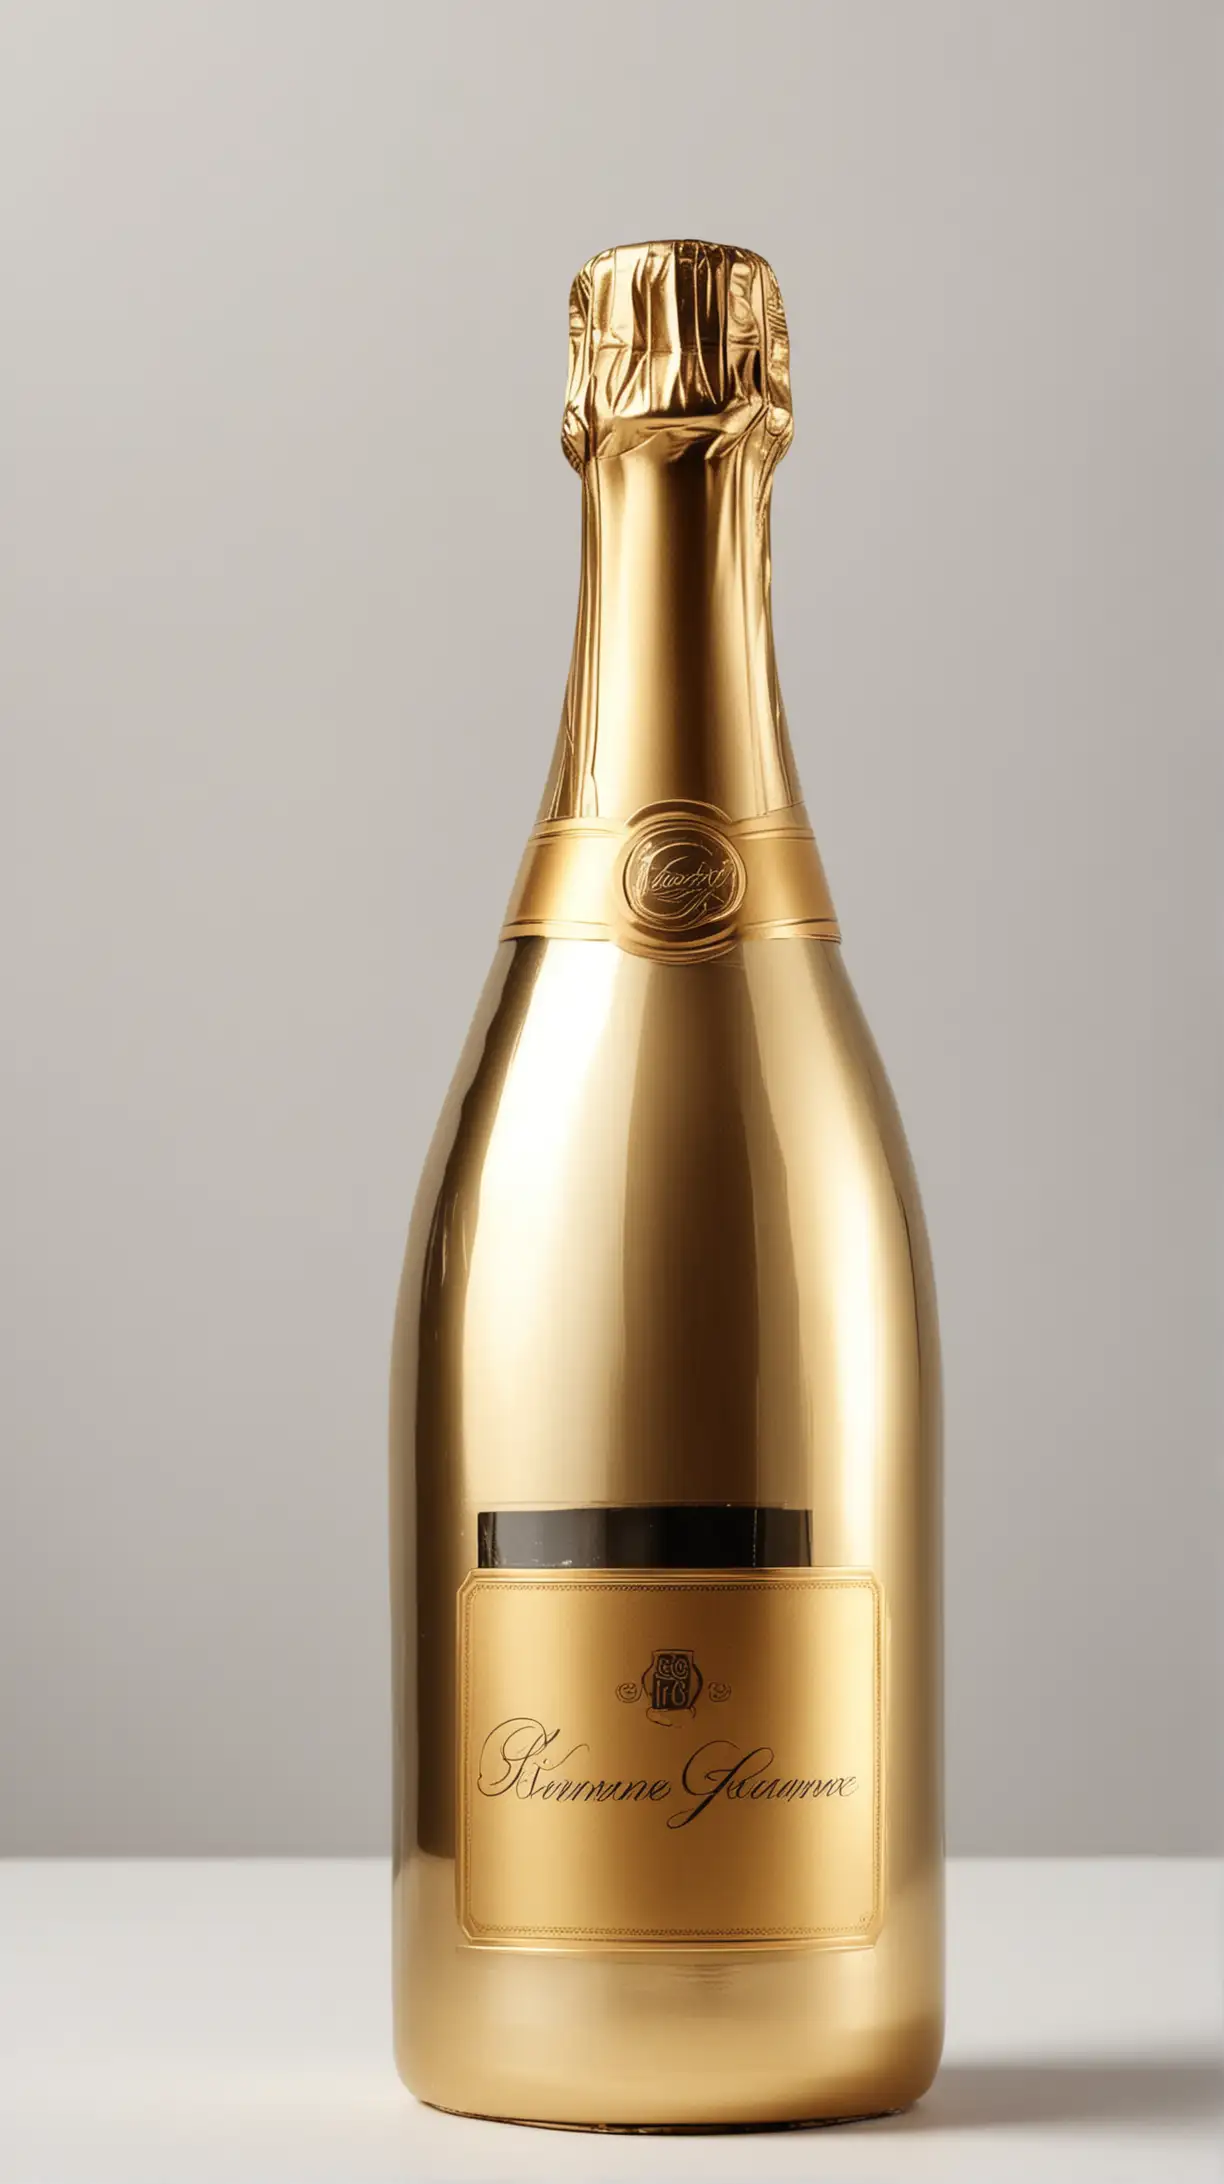 Luxury Gold Champagne Bottle on White Background